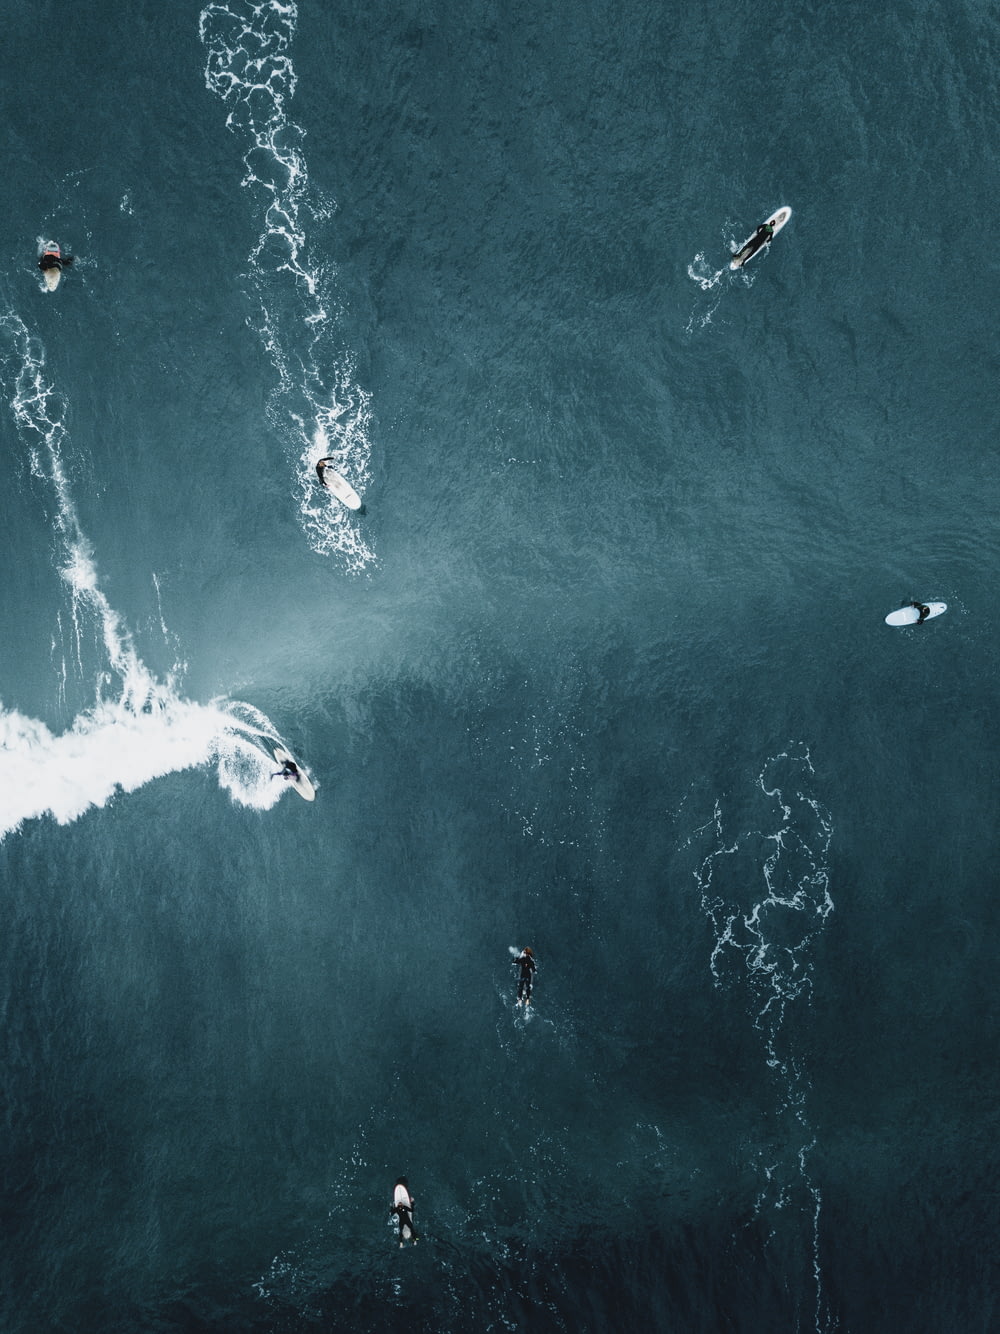 people surfboarding on ocean